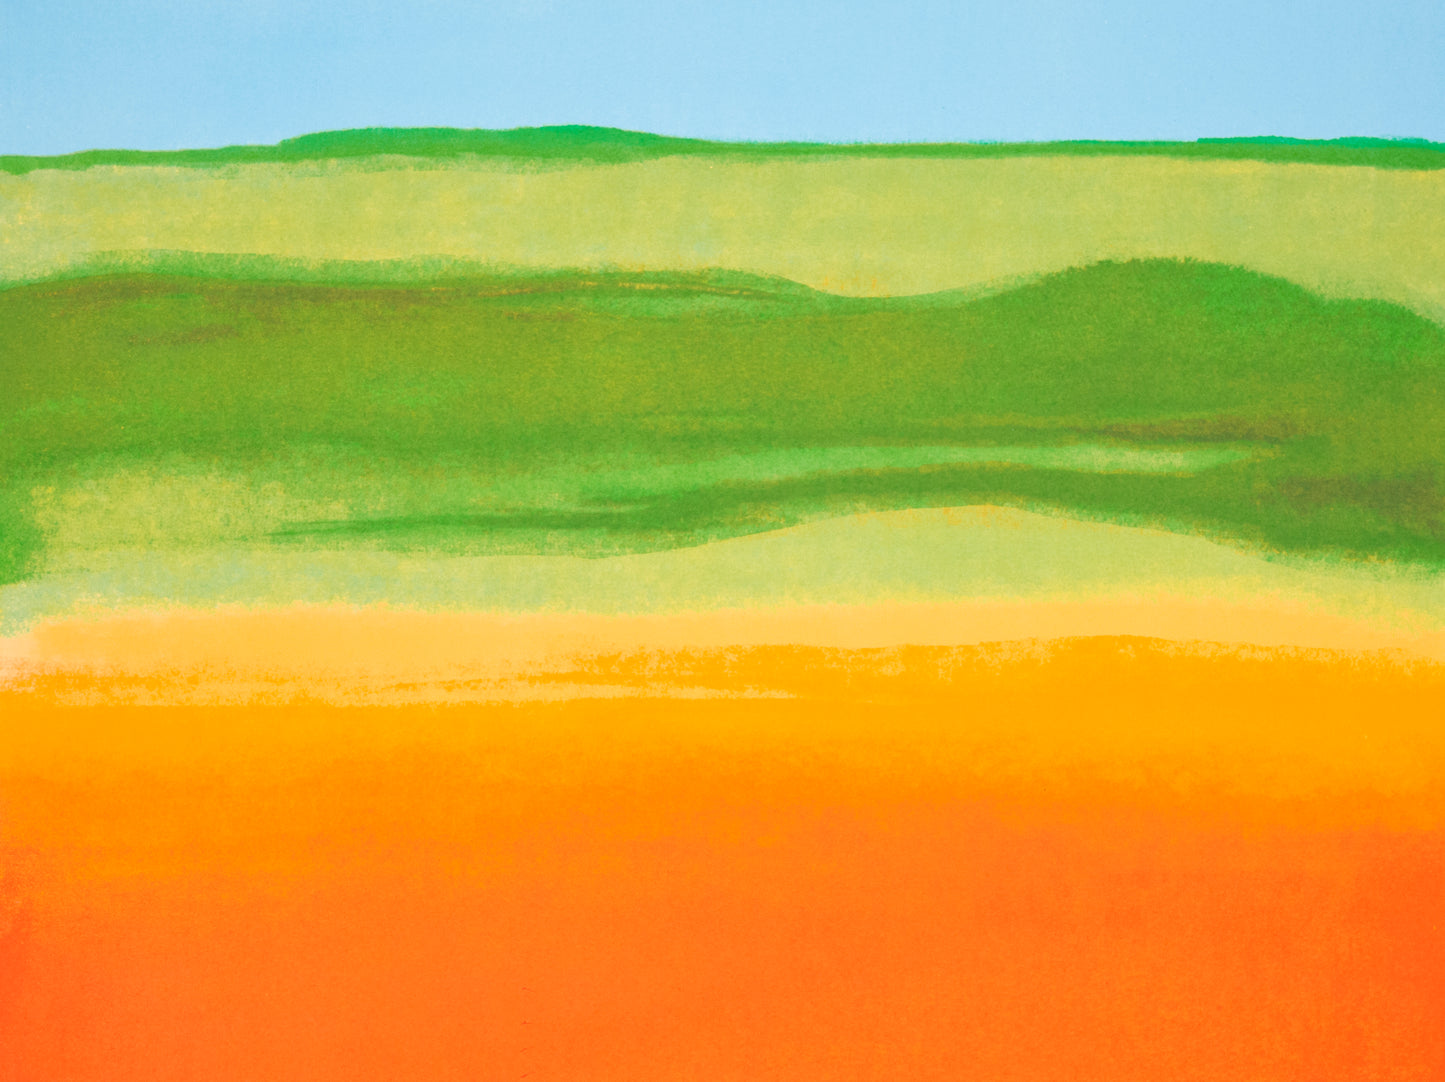 Richard Mayhew "A Landscape For Bob" (2013)